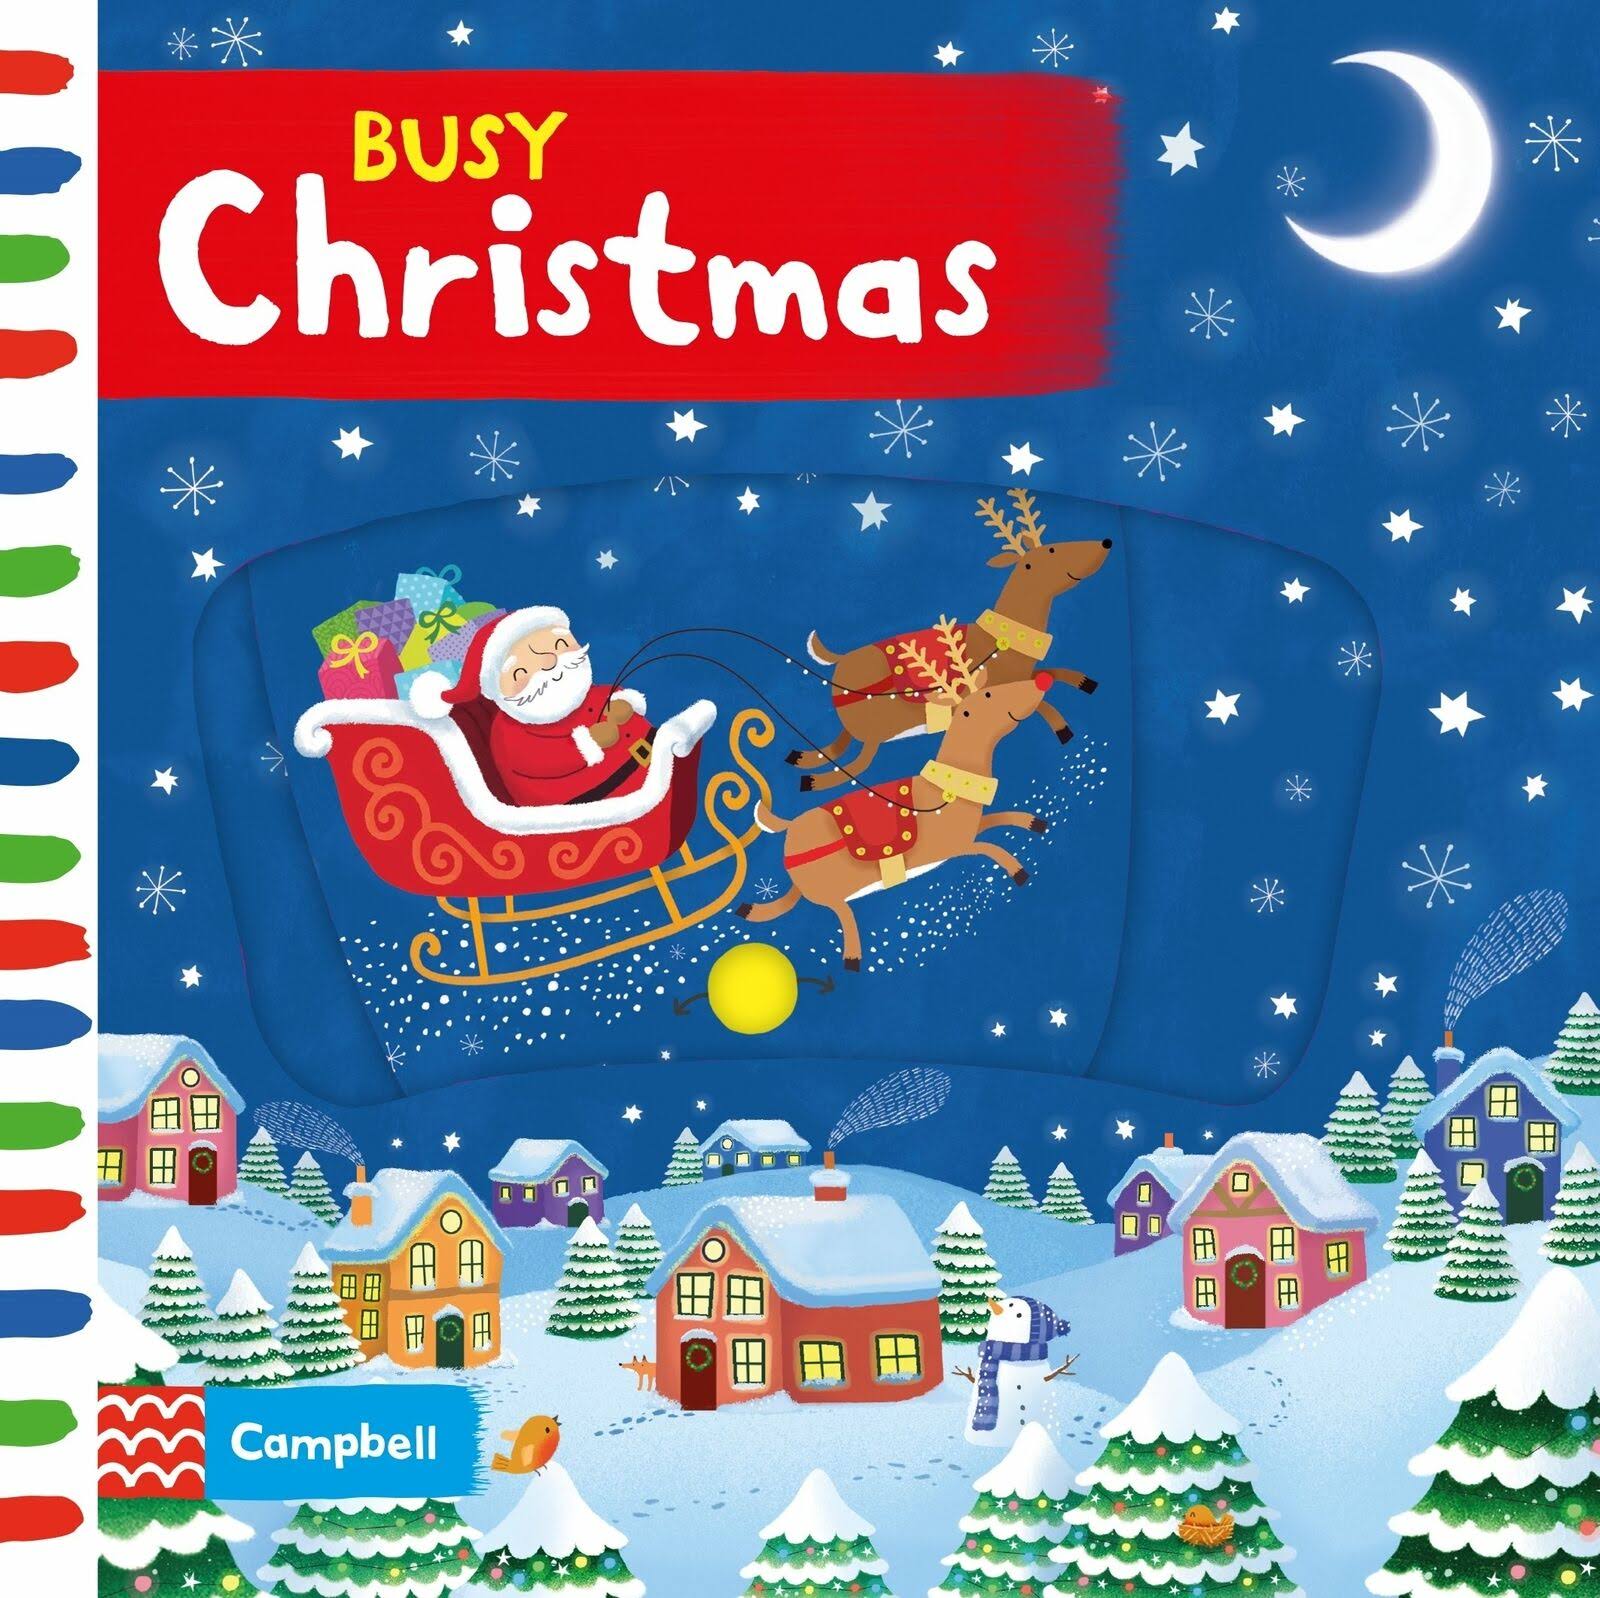 Busy Christmas [Book]